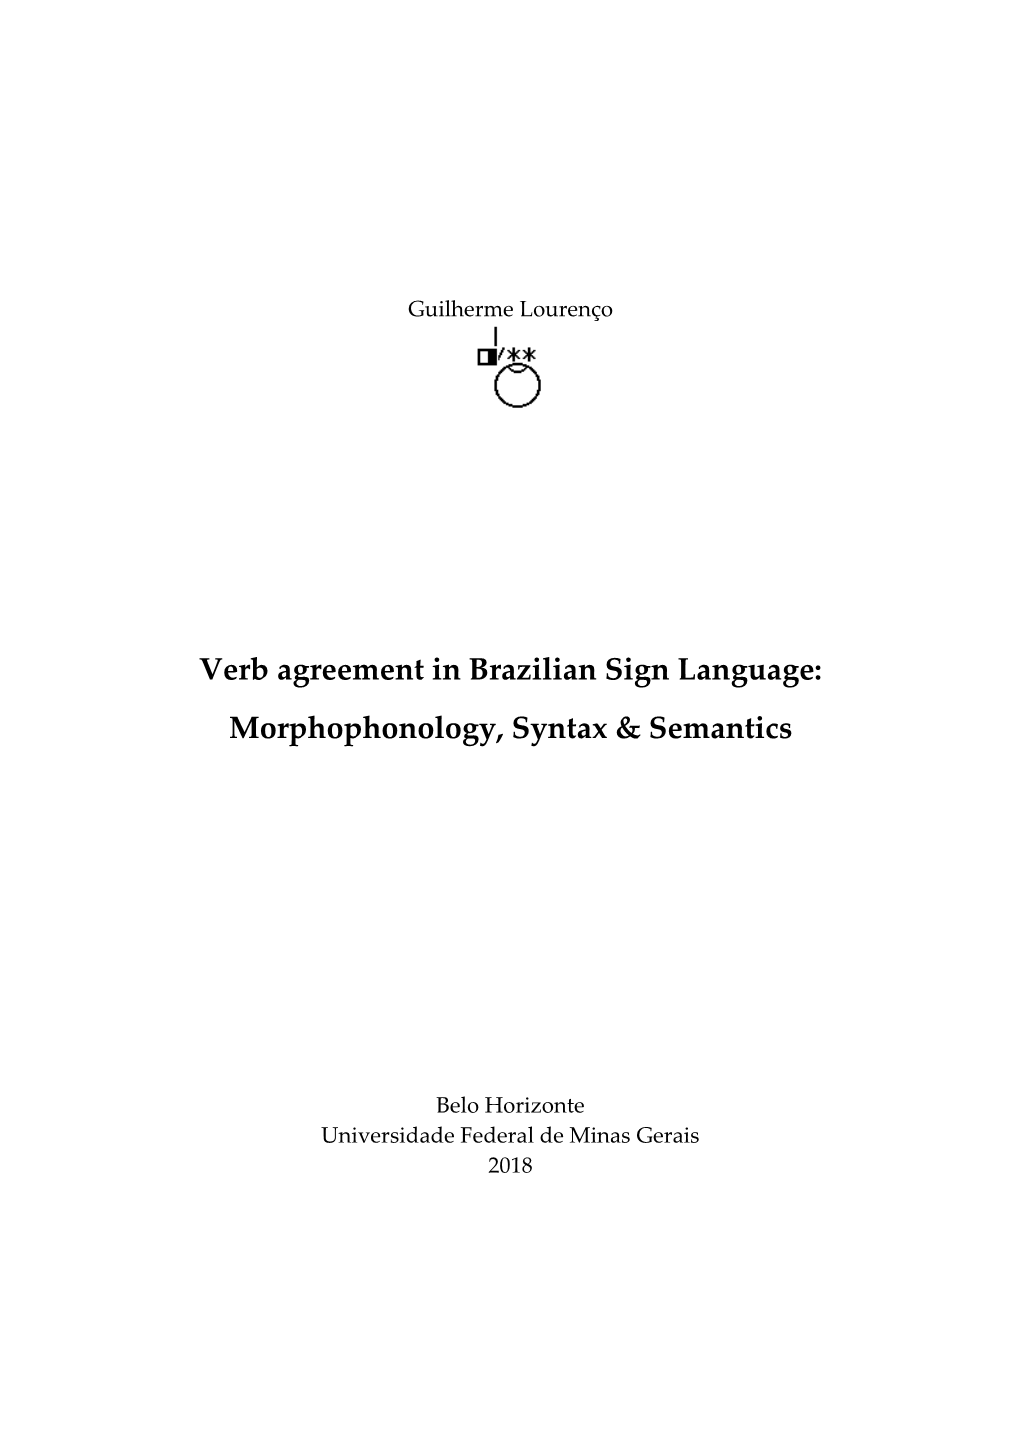 Verb Agreement in Brazilian Sign Language: Morphophonology, Syntax & Semantics